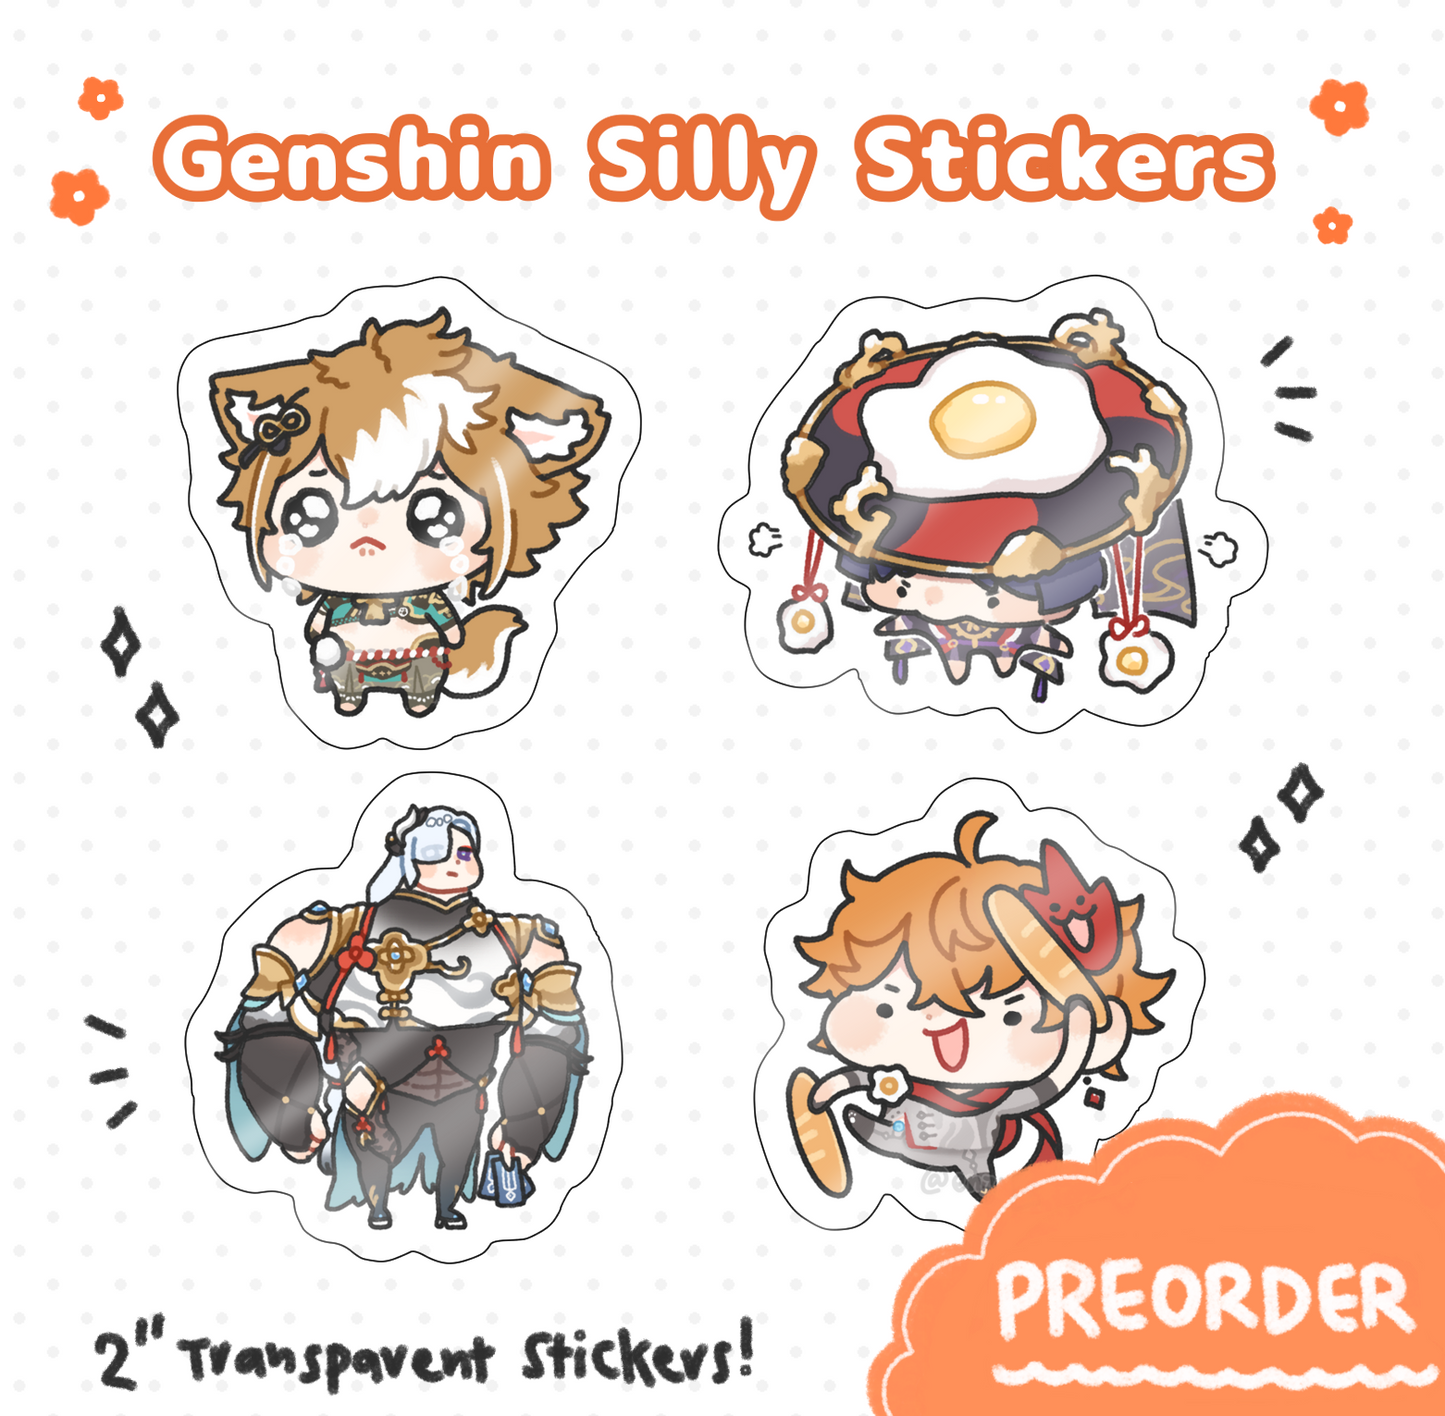 Genshin Silly Stickers